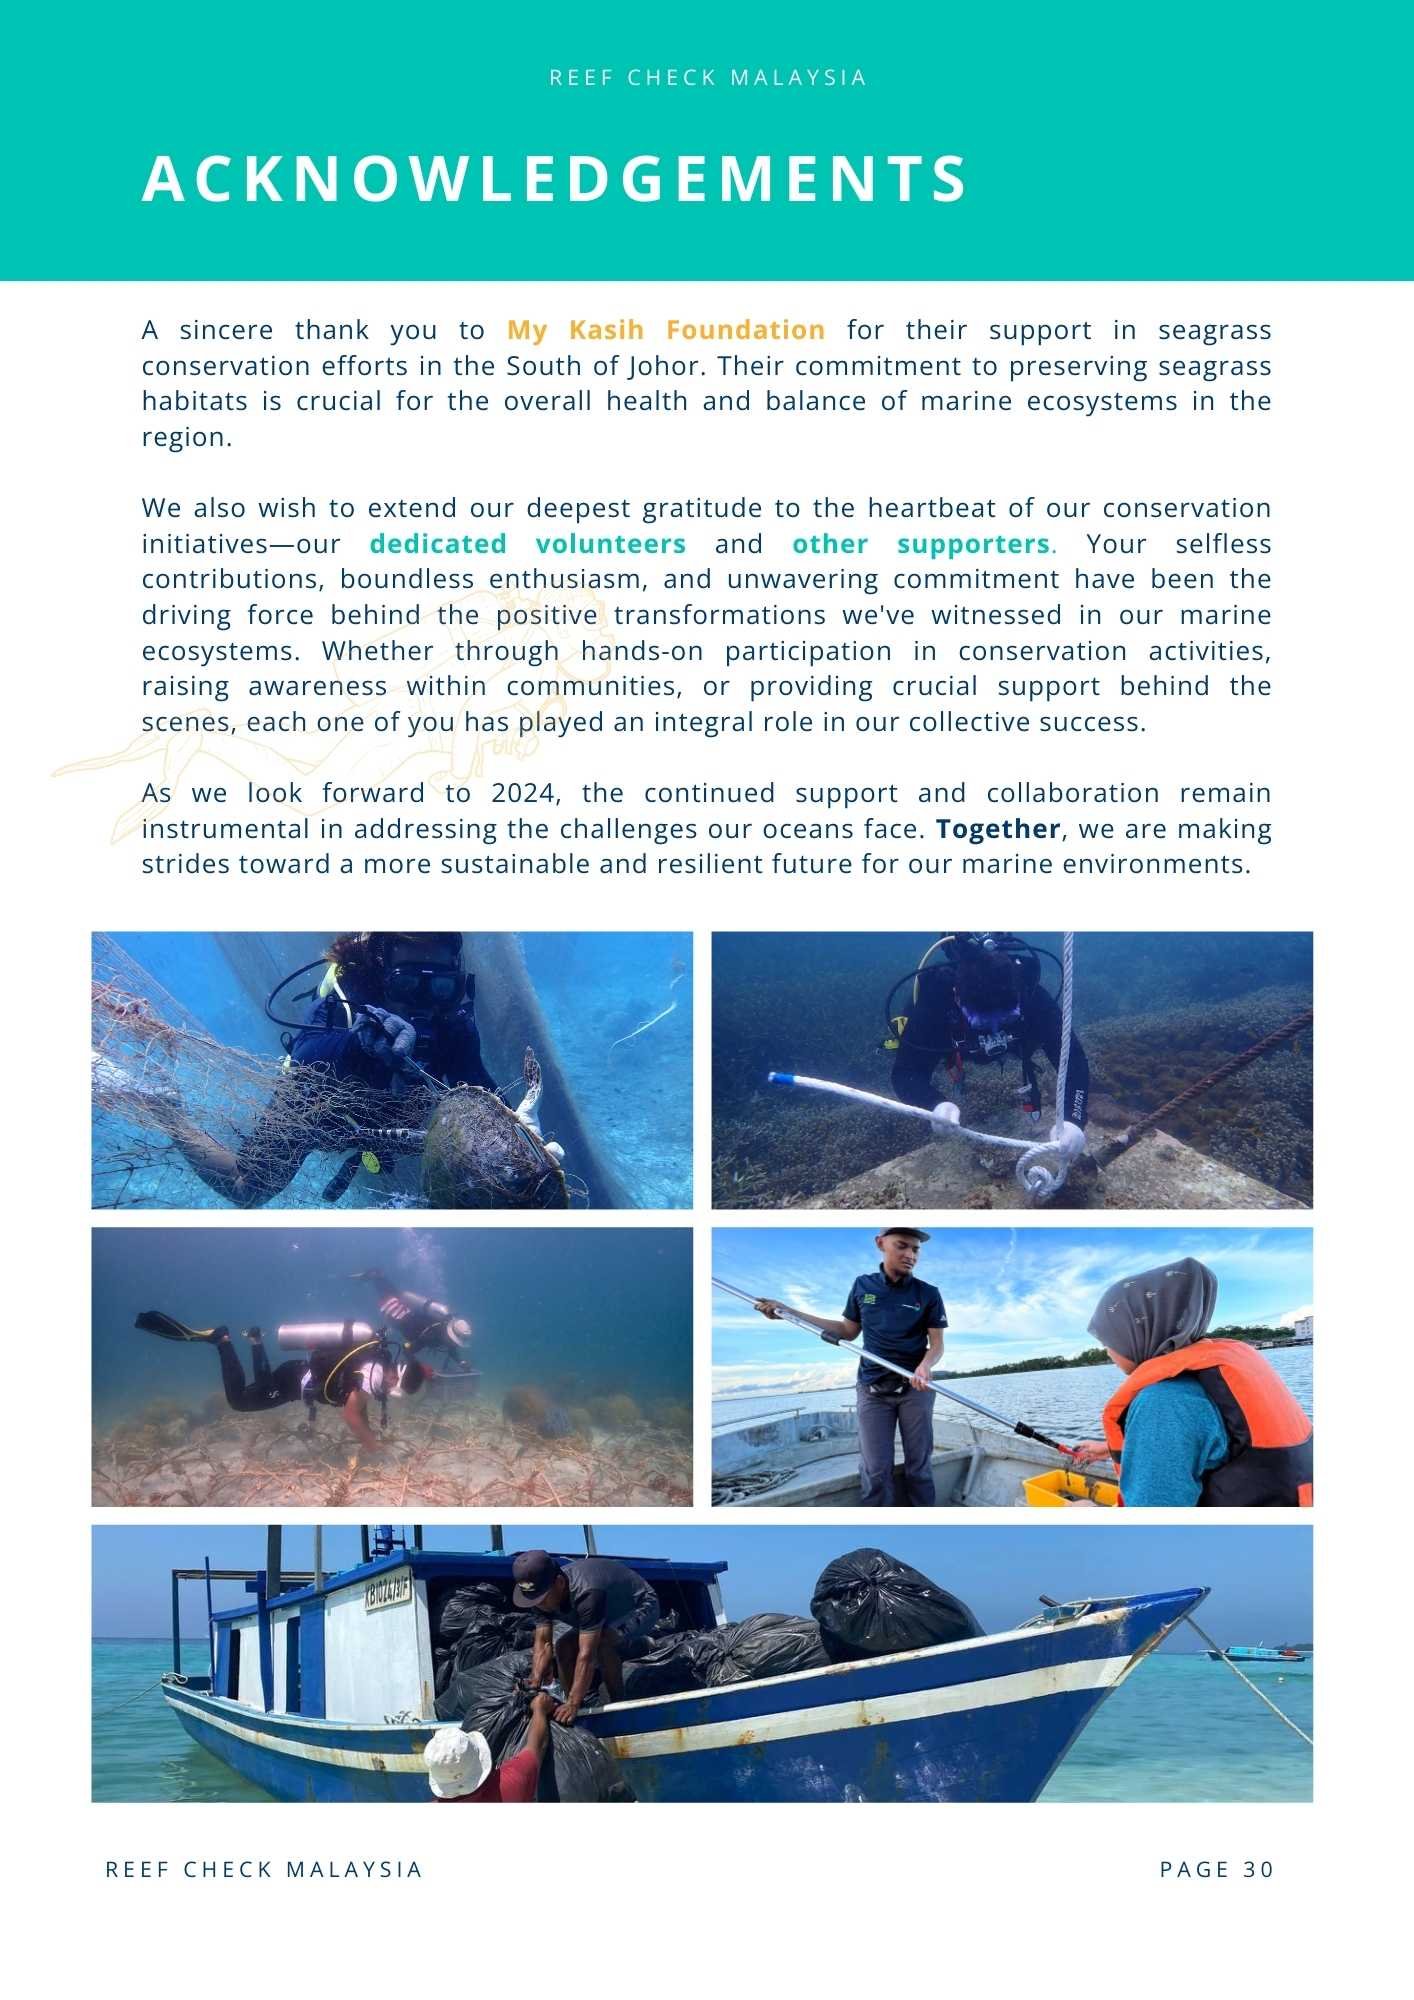 RCM Annual Report 2023 marine conservation (31).jpg